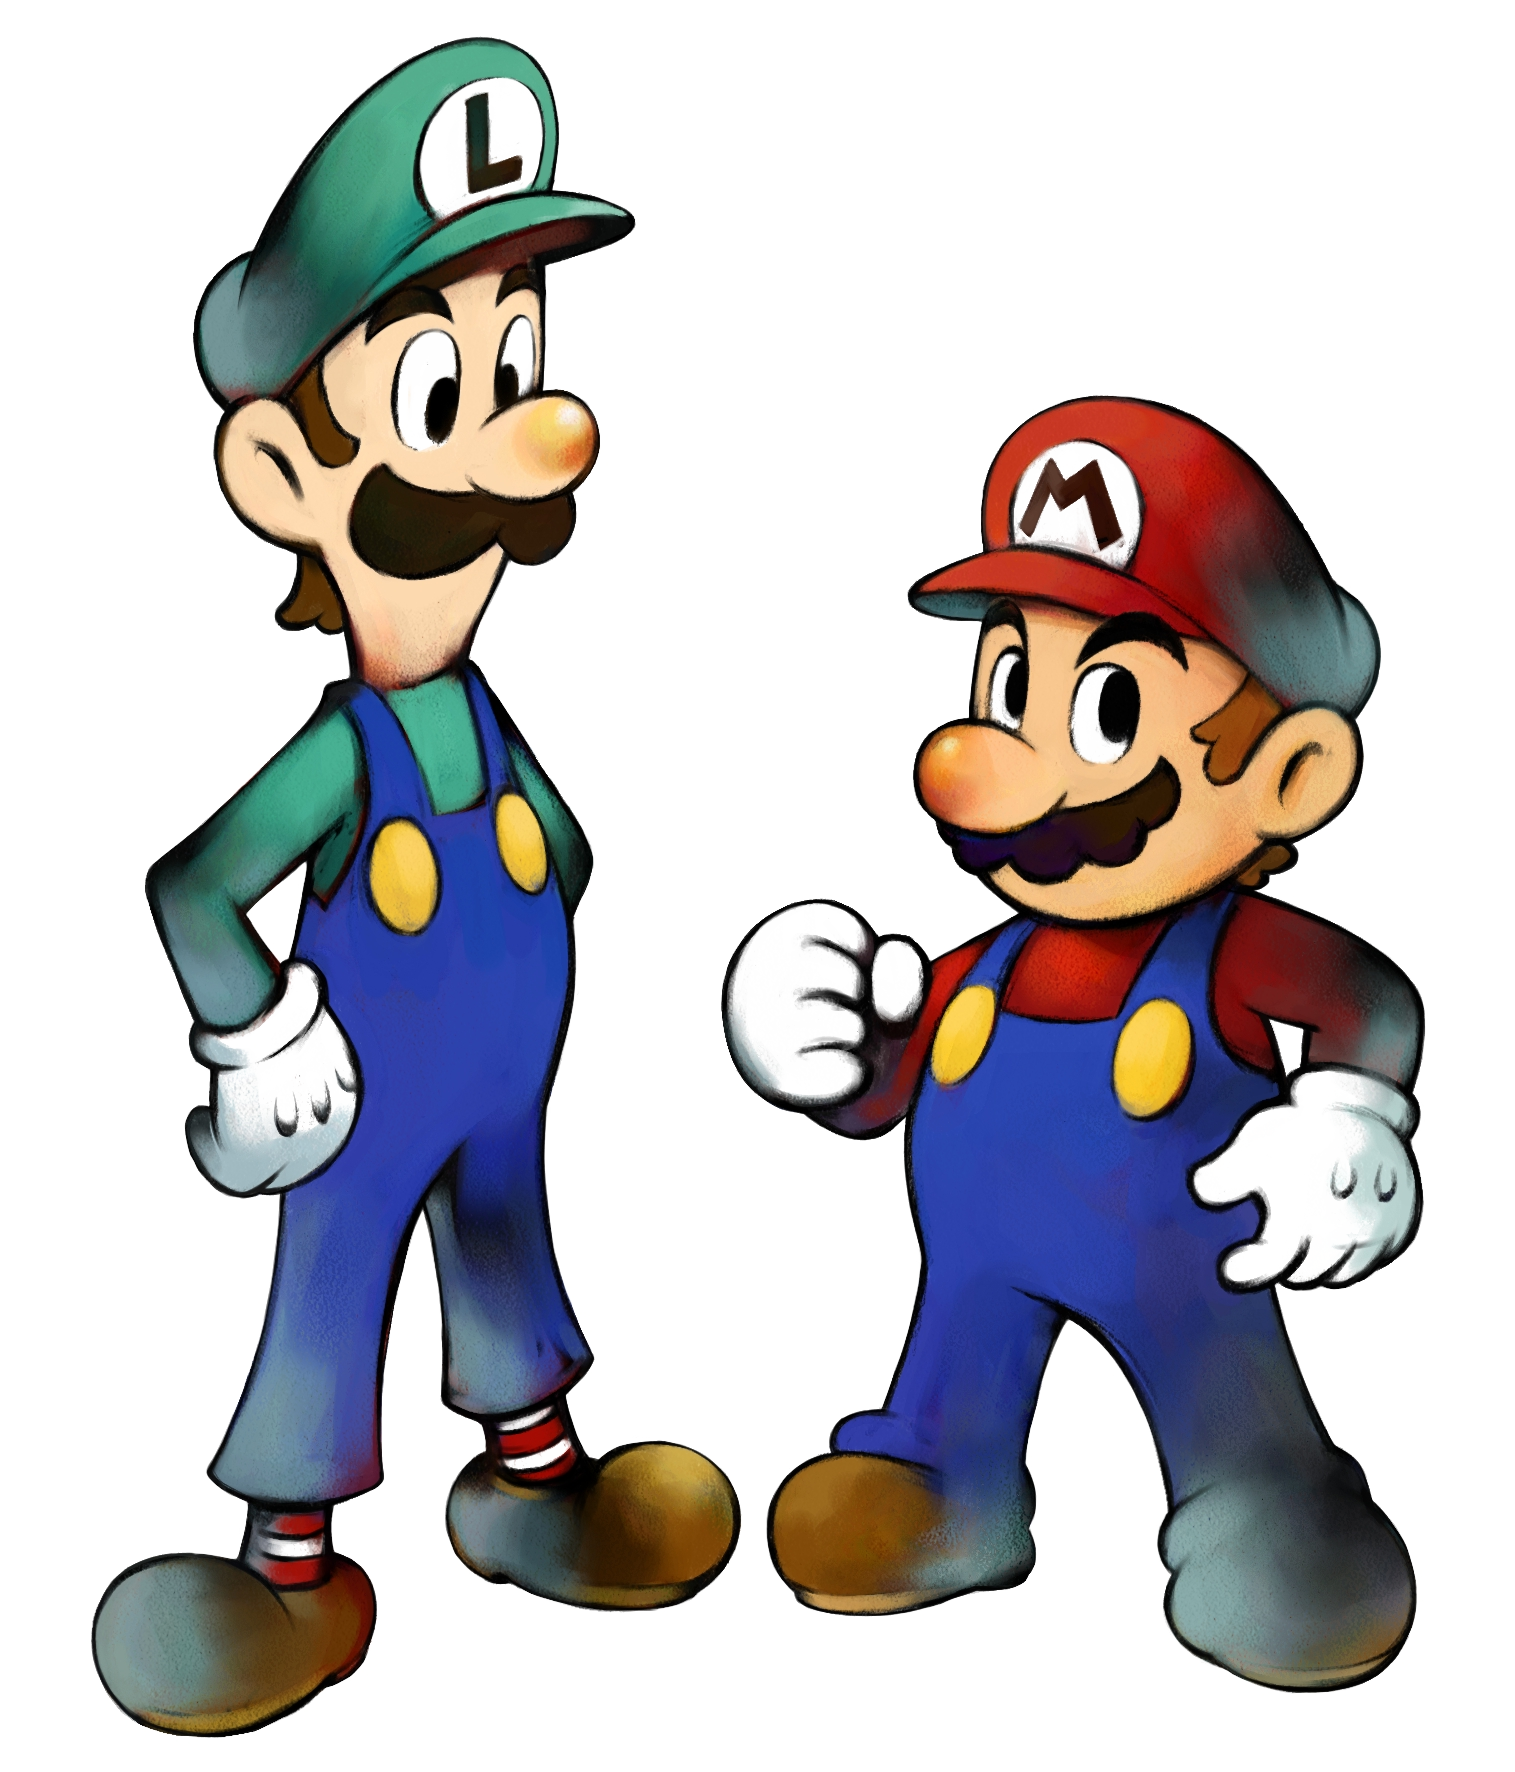 Mario And Luigi PNG Background Image